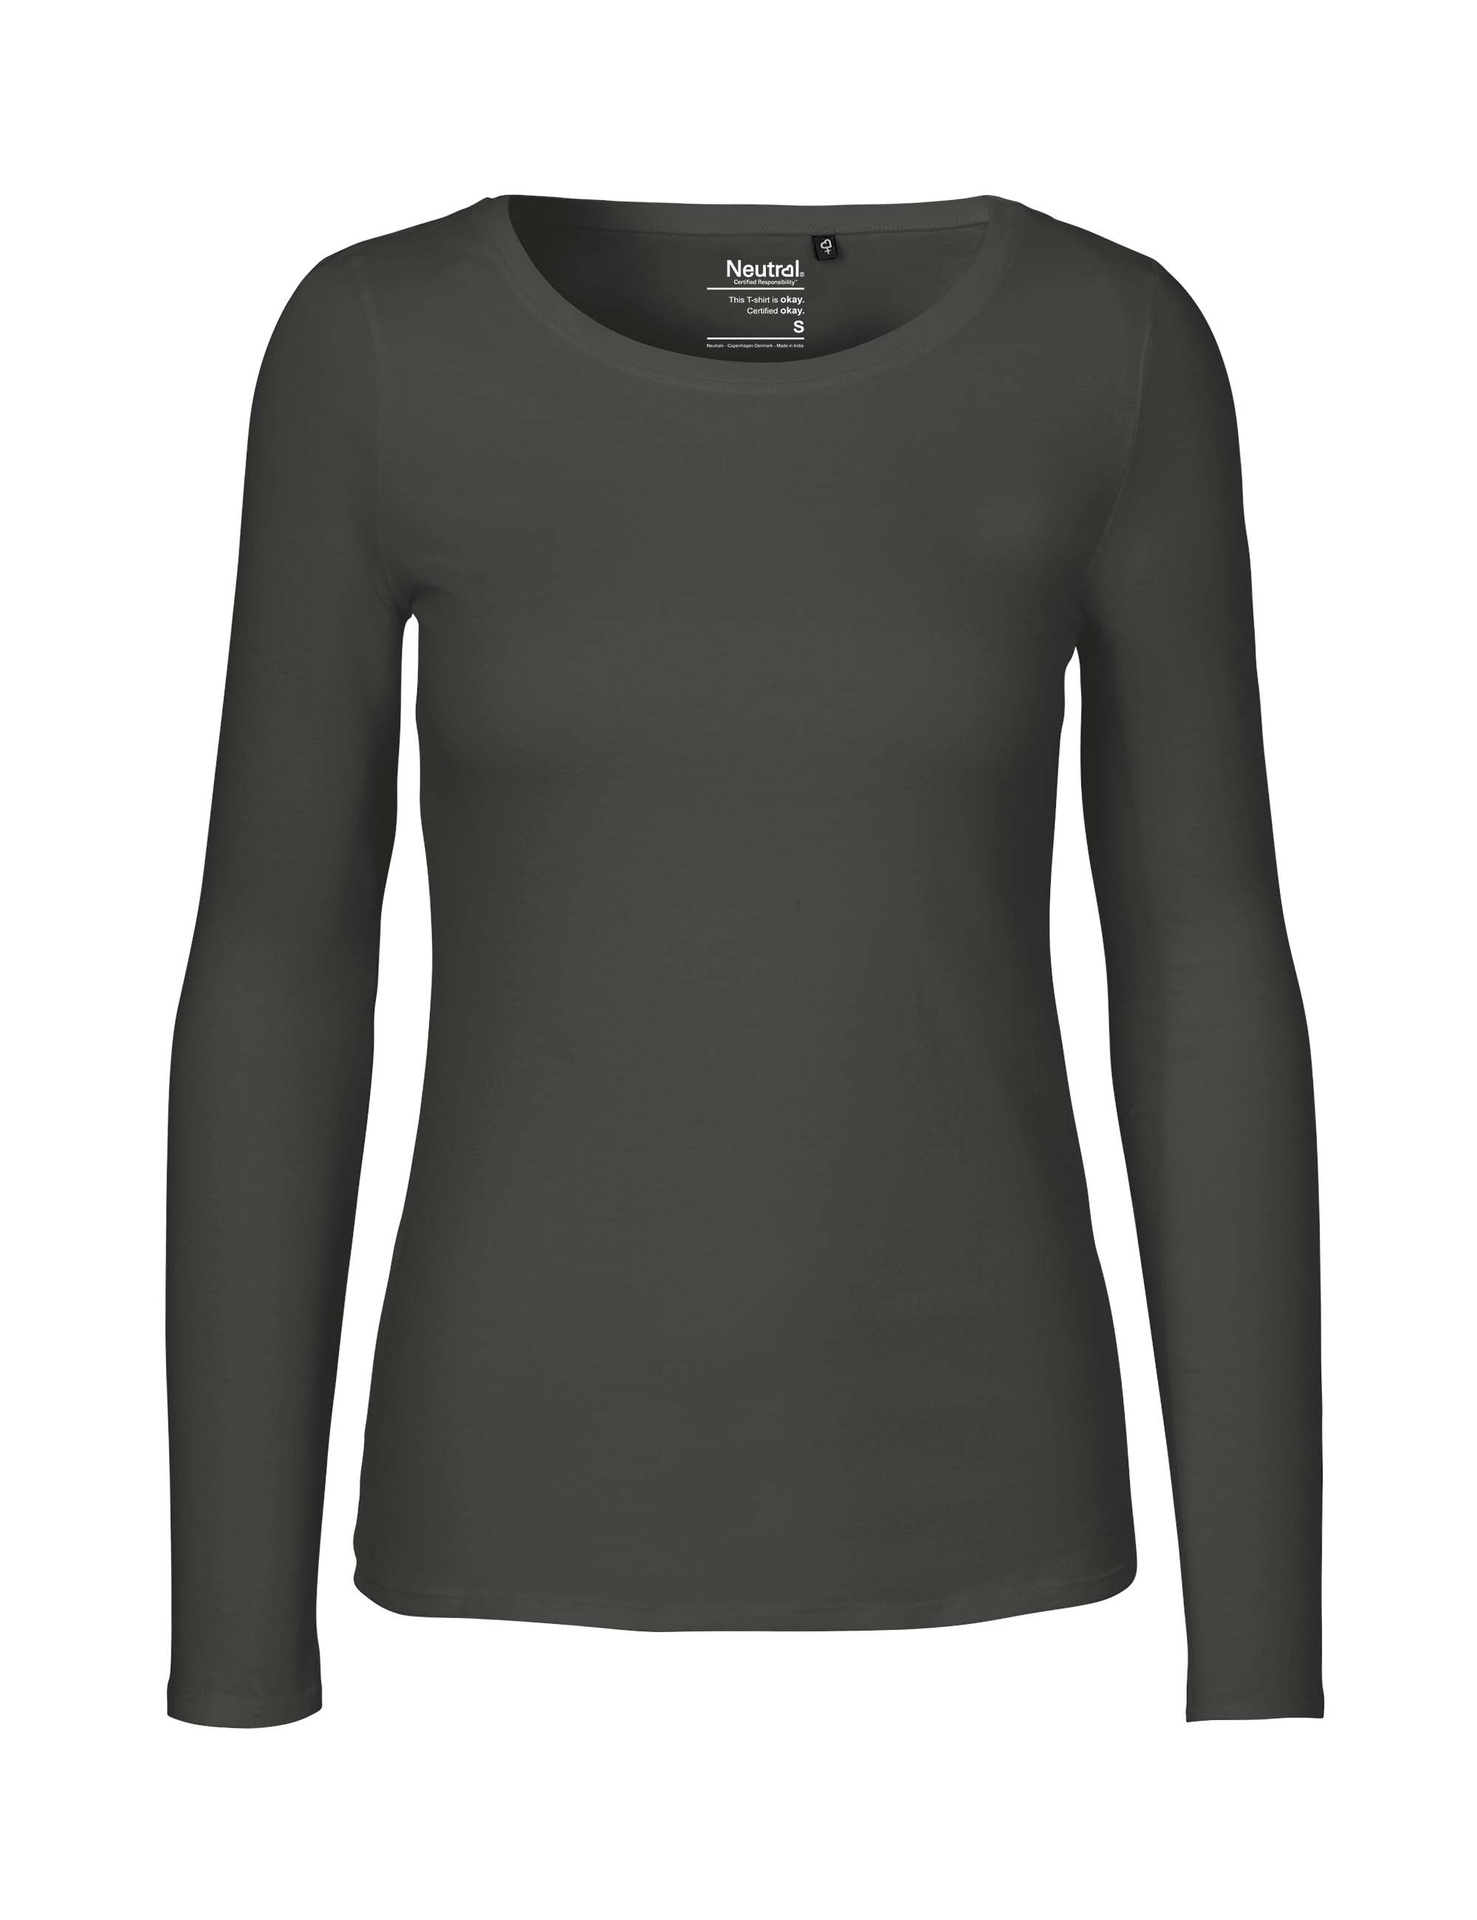 [PR/04663] Ladies Long Sleeve T-Shirt (Charcoal 06, XS)